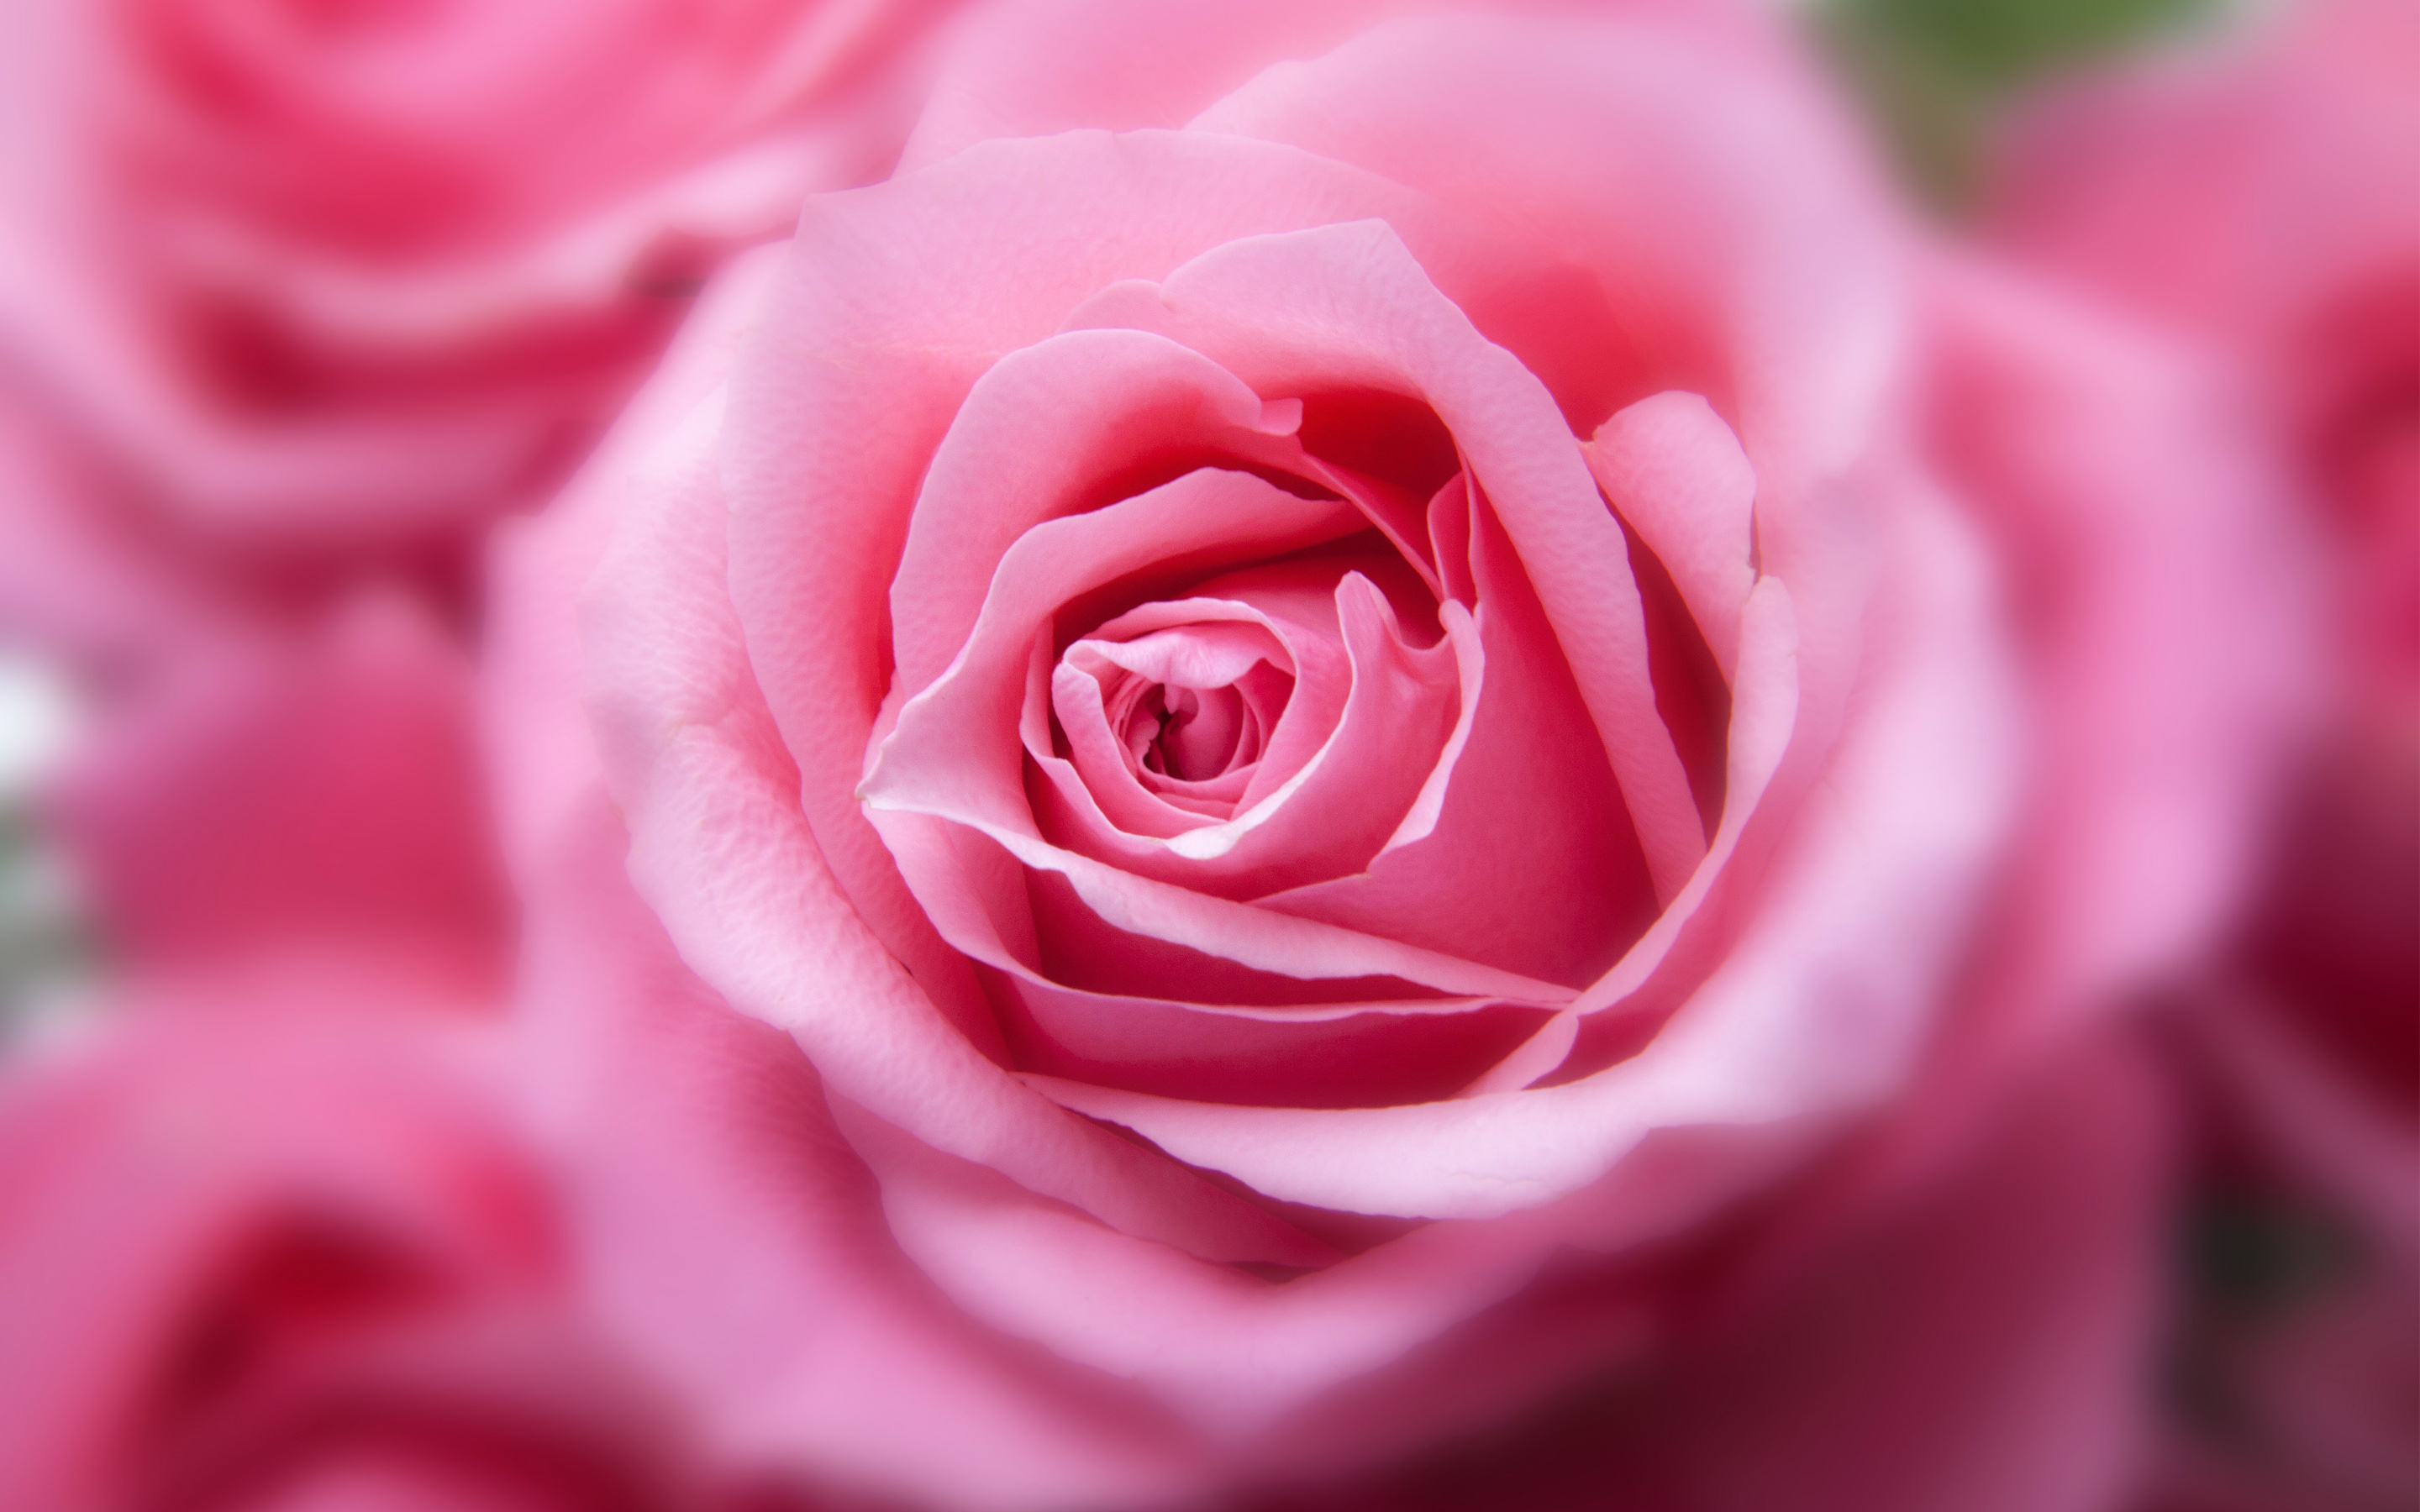 rose wallpaper hd,fiore,rose da giardino,pianta fiorita,rosa,rosa